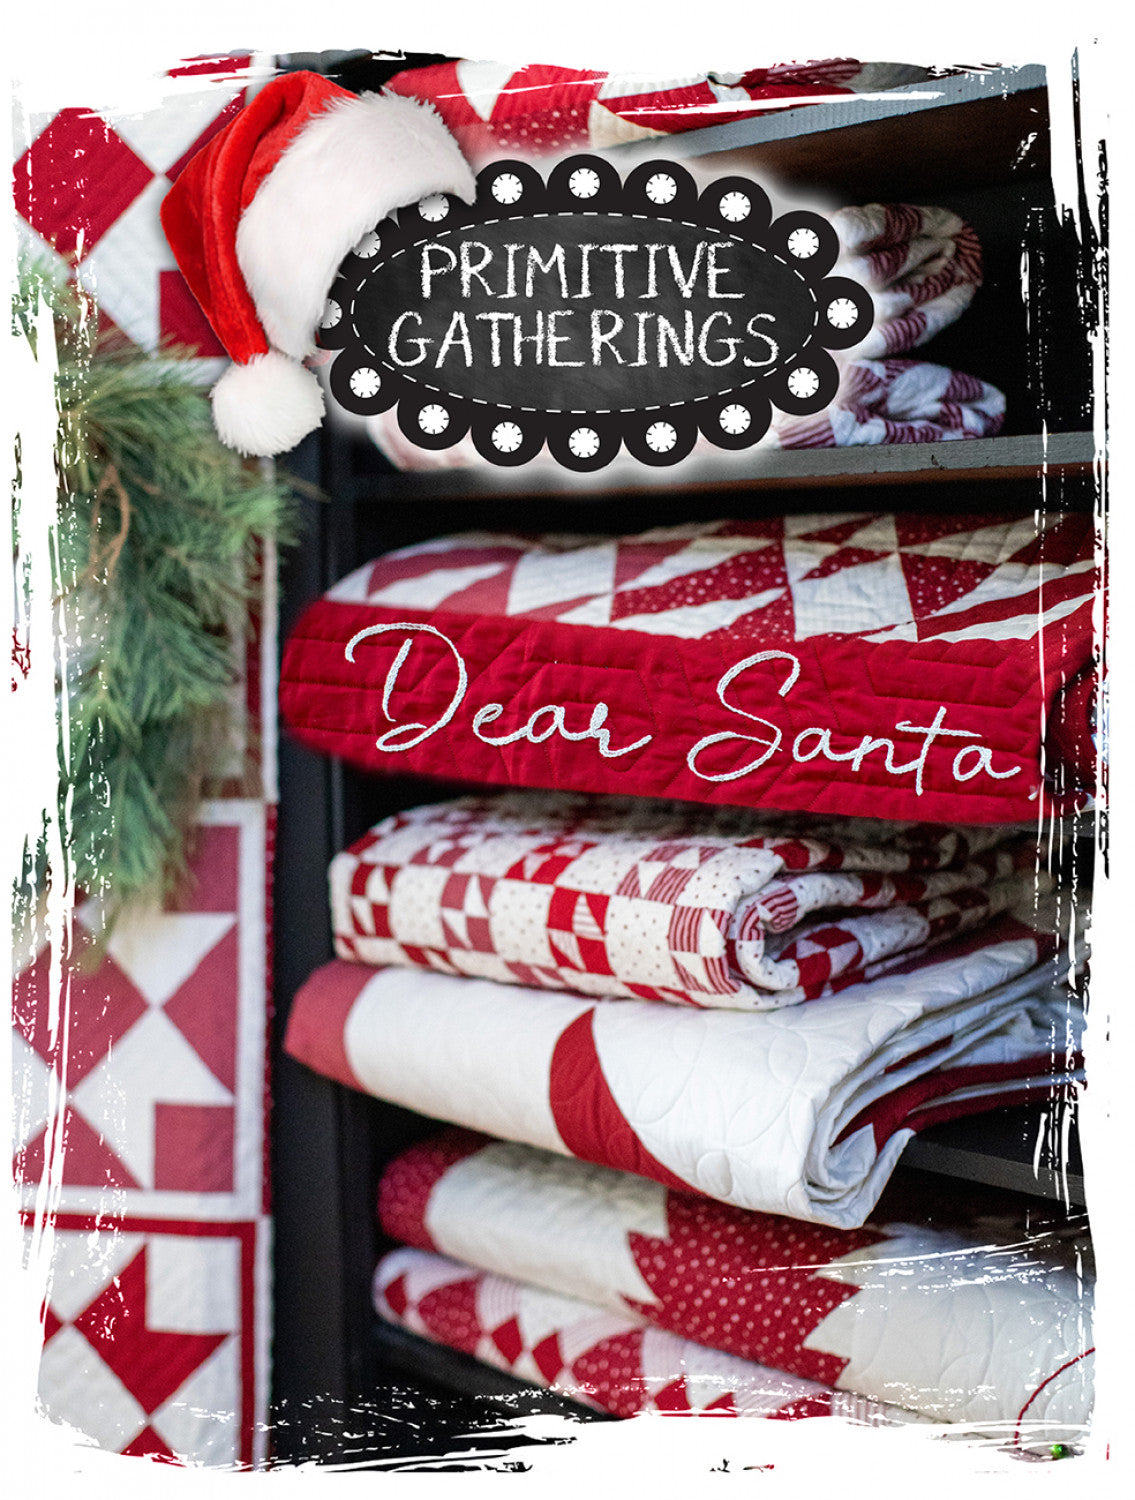 Dear Santa Quilt Projects Book by Lisa Bongean of Primitive Gatherings